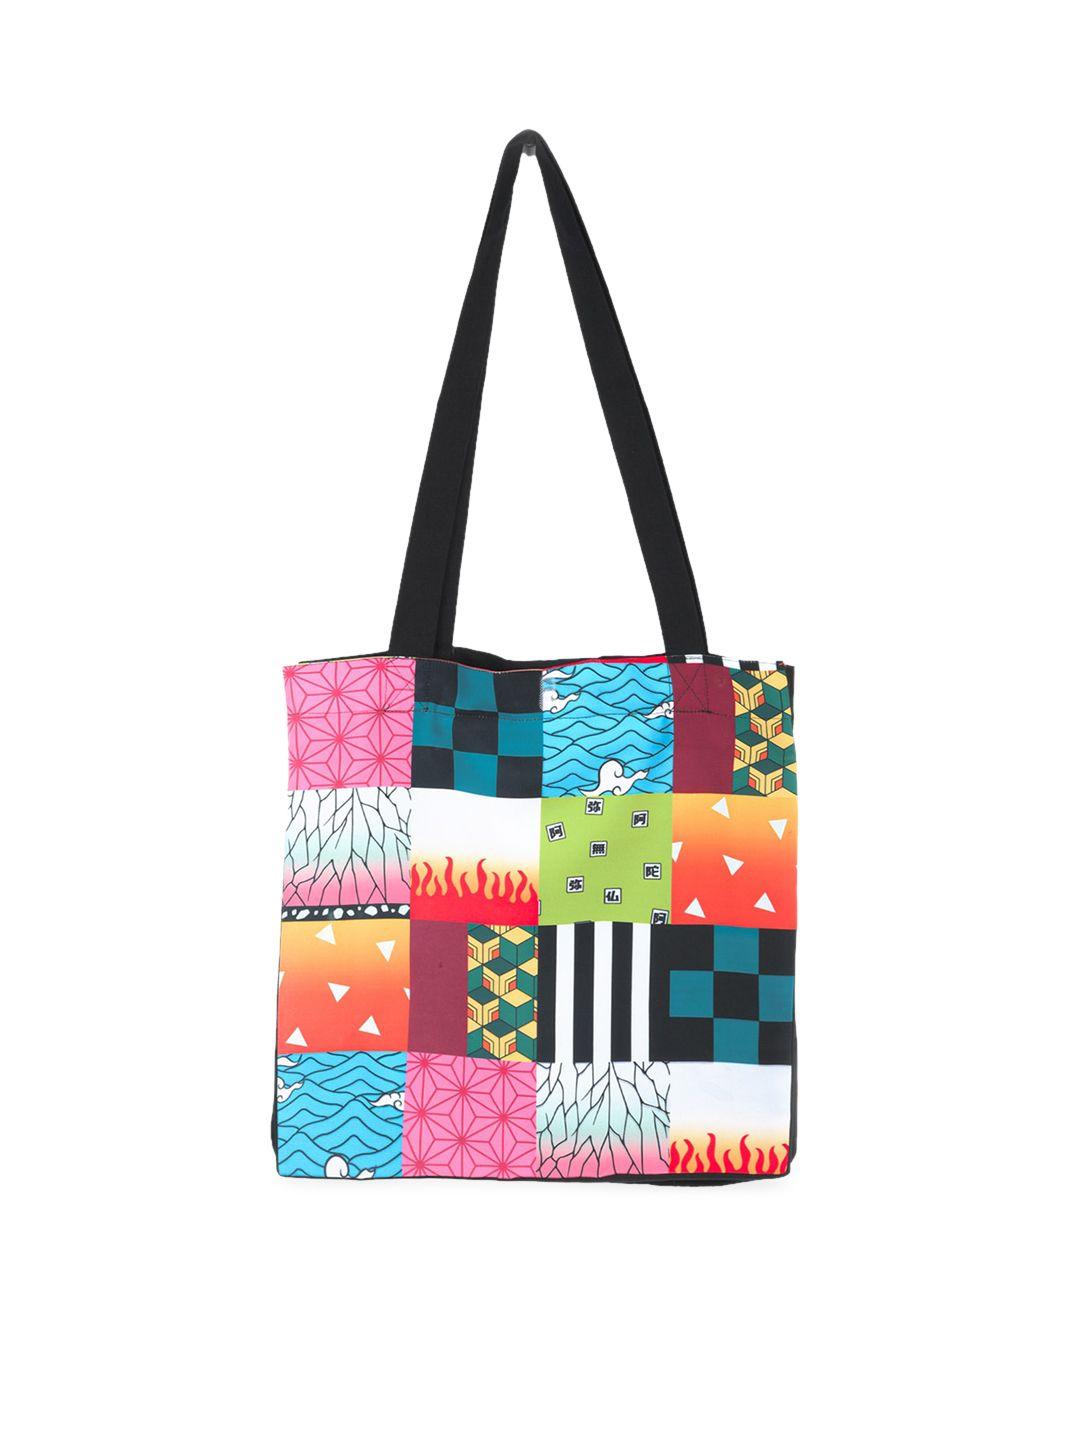 comicsense multicoloured printed shopper tote bag with tasselled